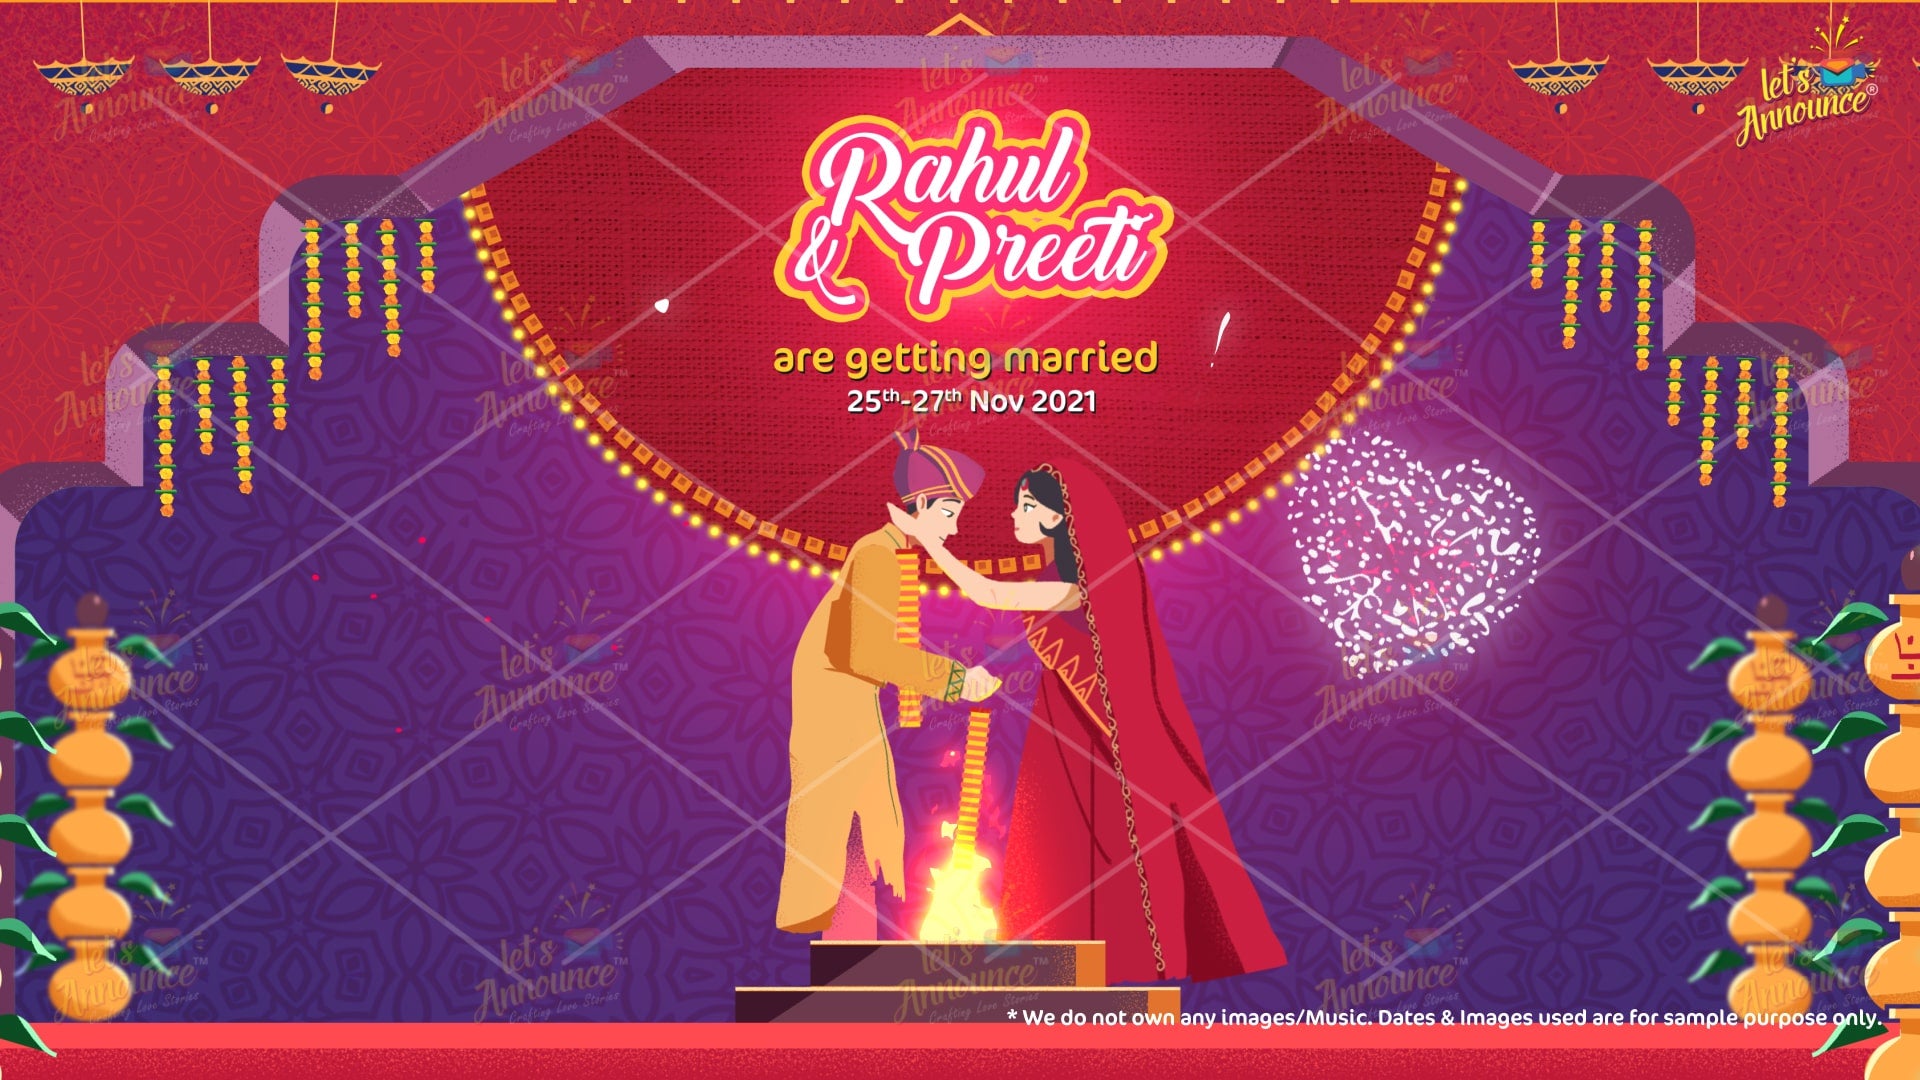 Rajasthani wedding invite -95 sec (USD 100$)